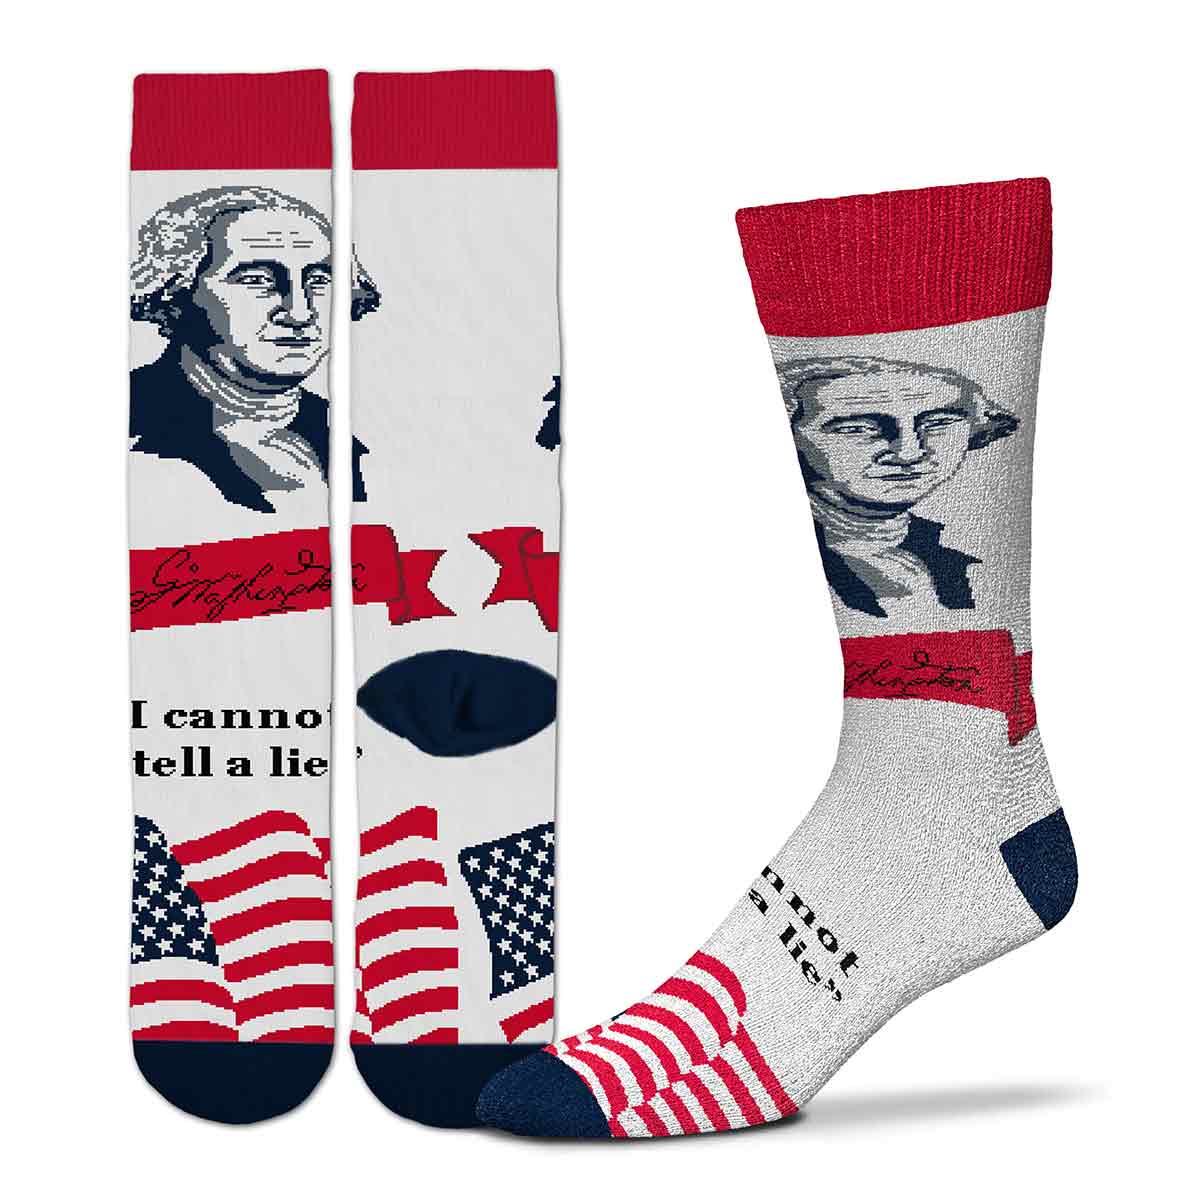 George Washington Patriotic Selfie Socks from For Bare Feet